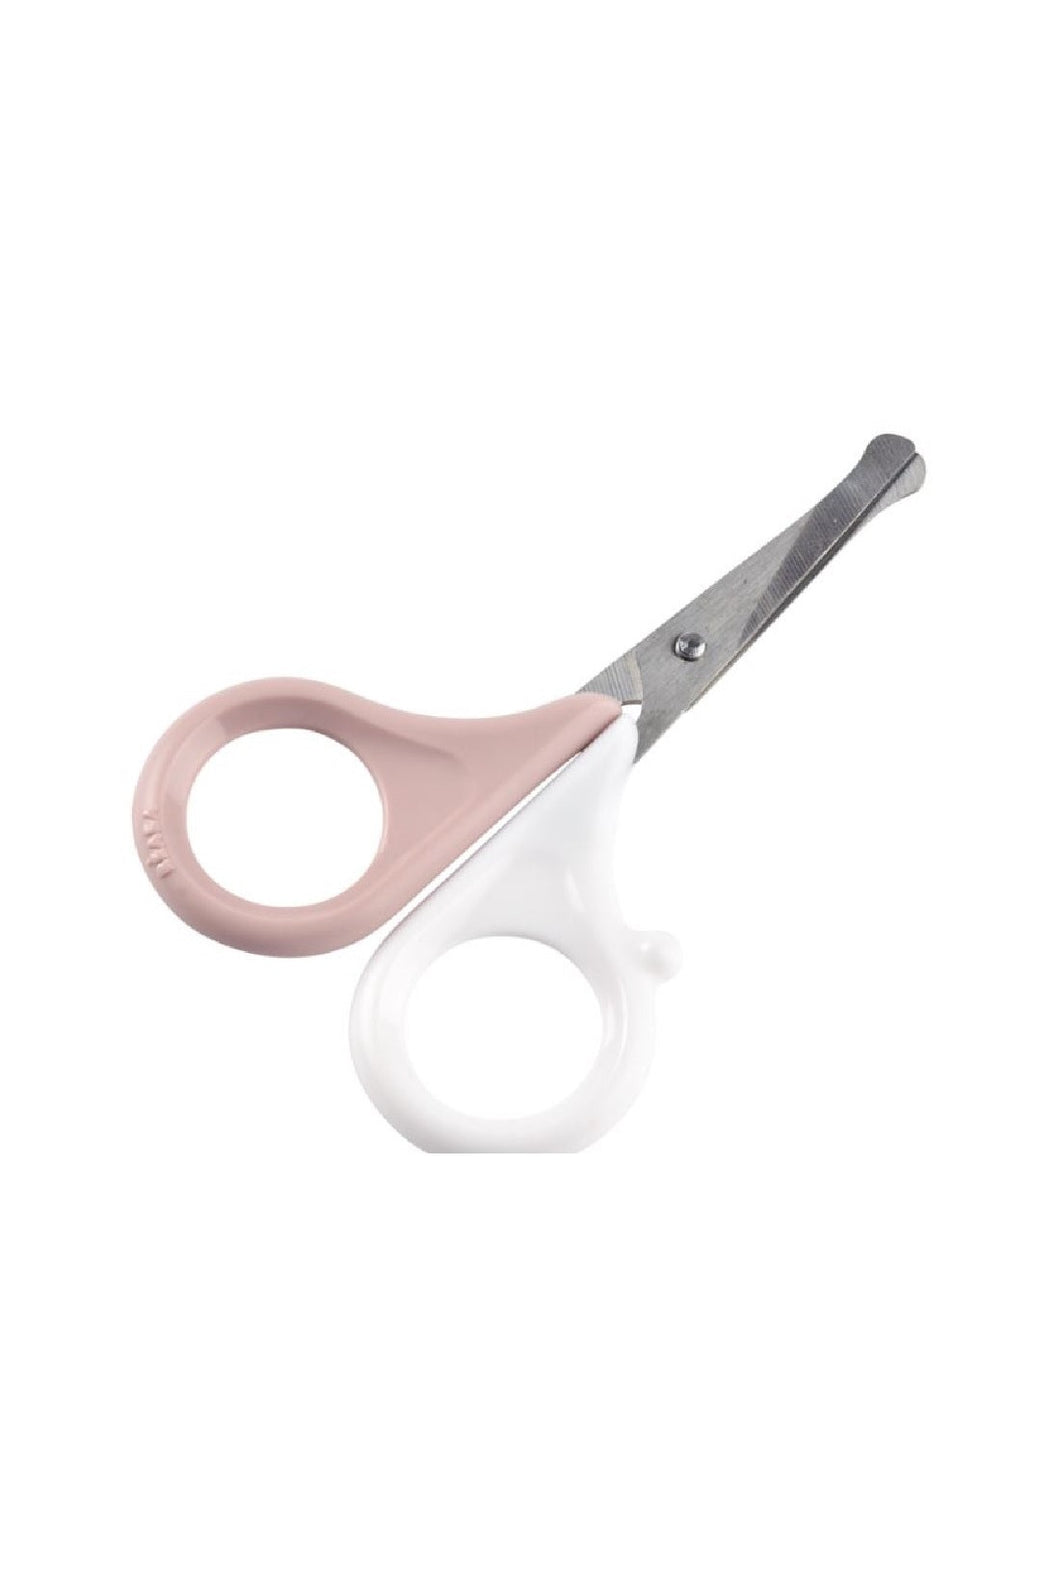 Beaba Baby Scissors Old Pink